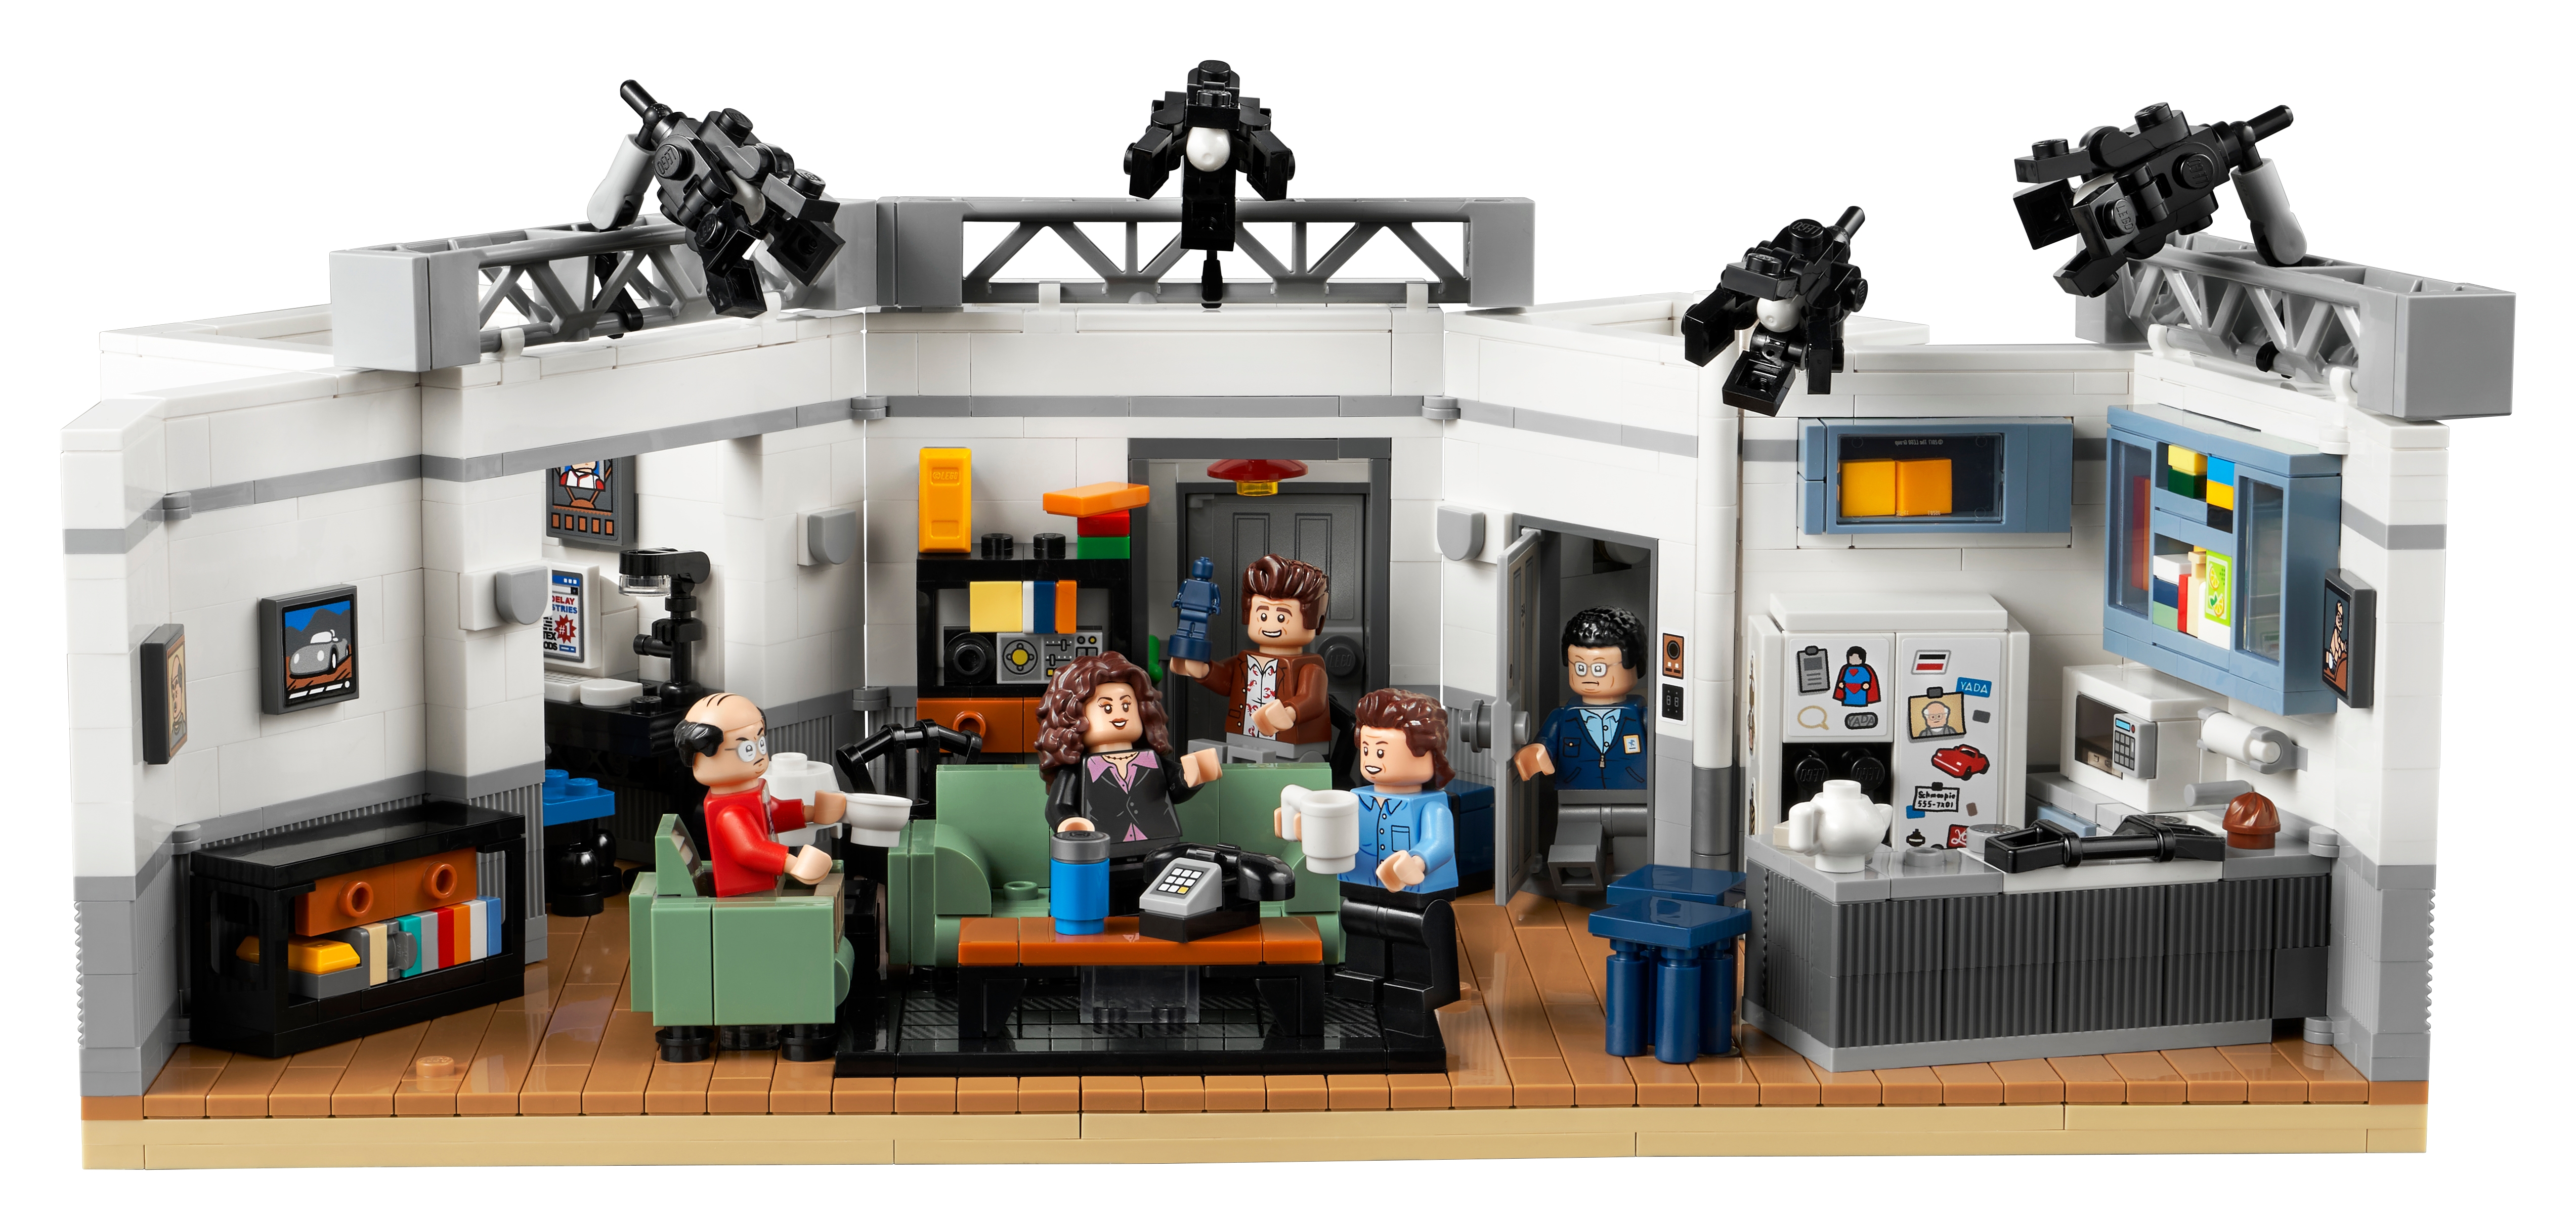 LEGO The Office on X: @bjnovak Lego Ryan Howard! #LegoTheOffice